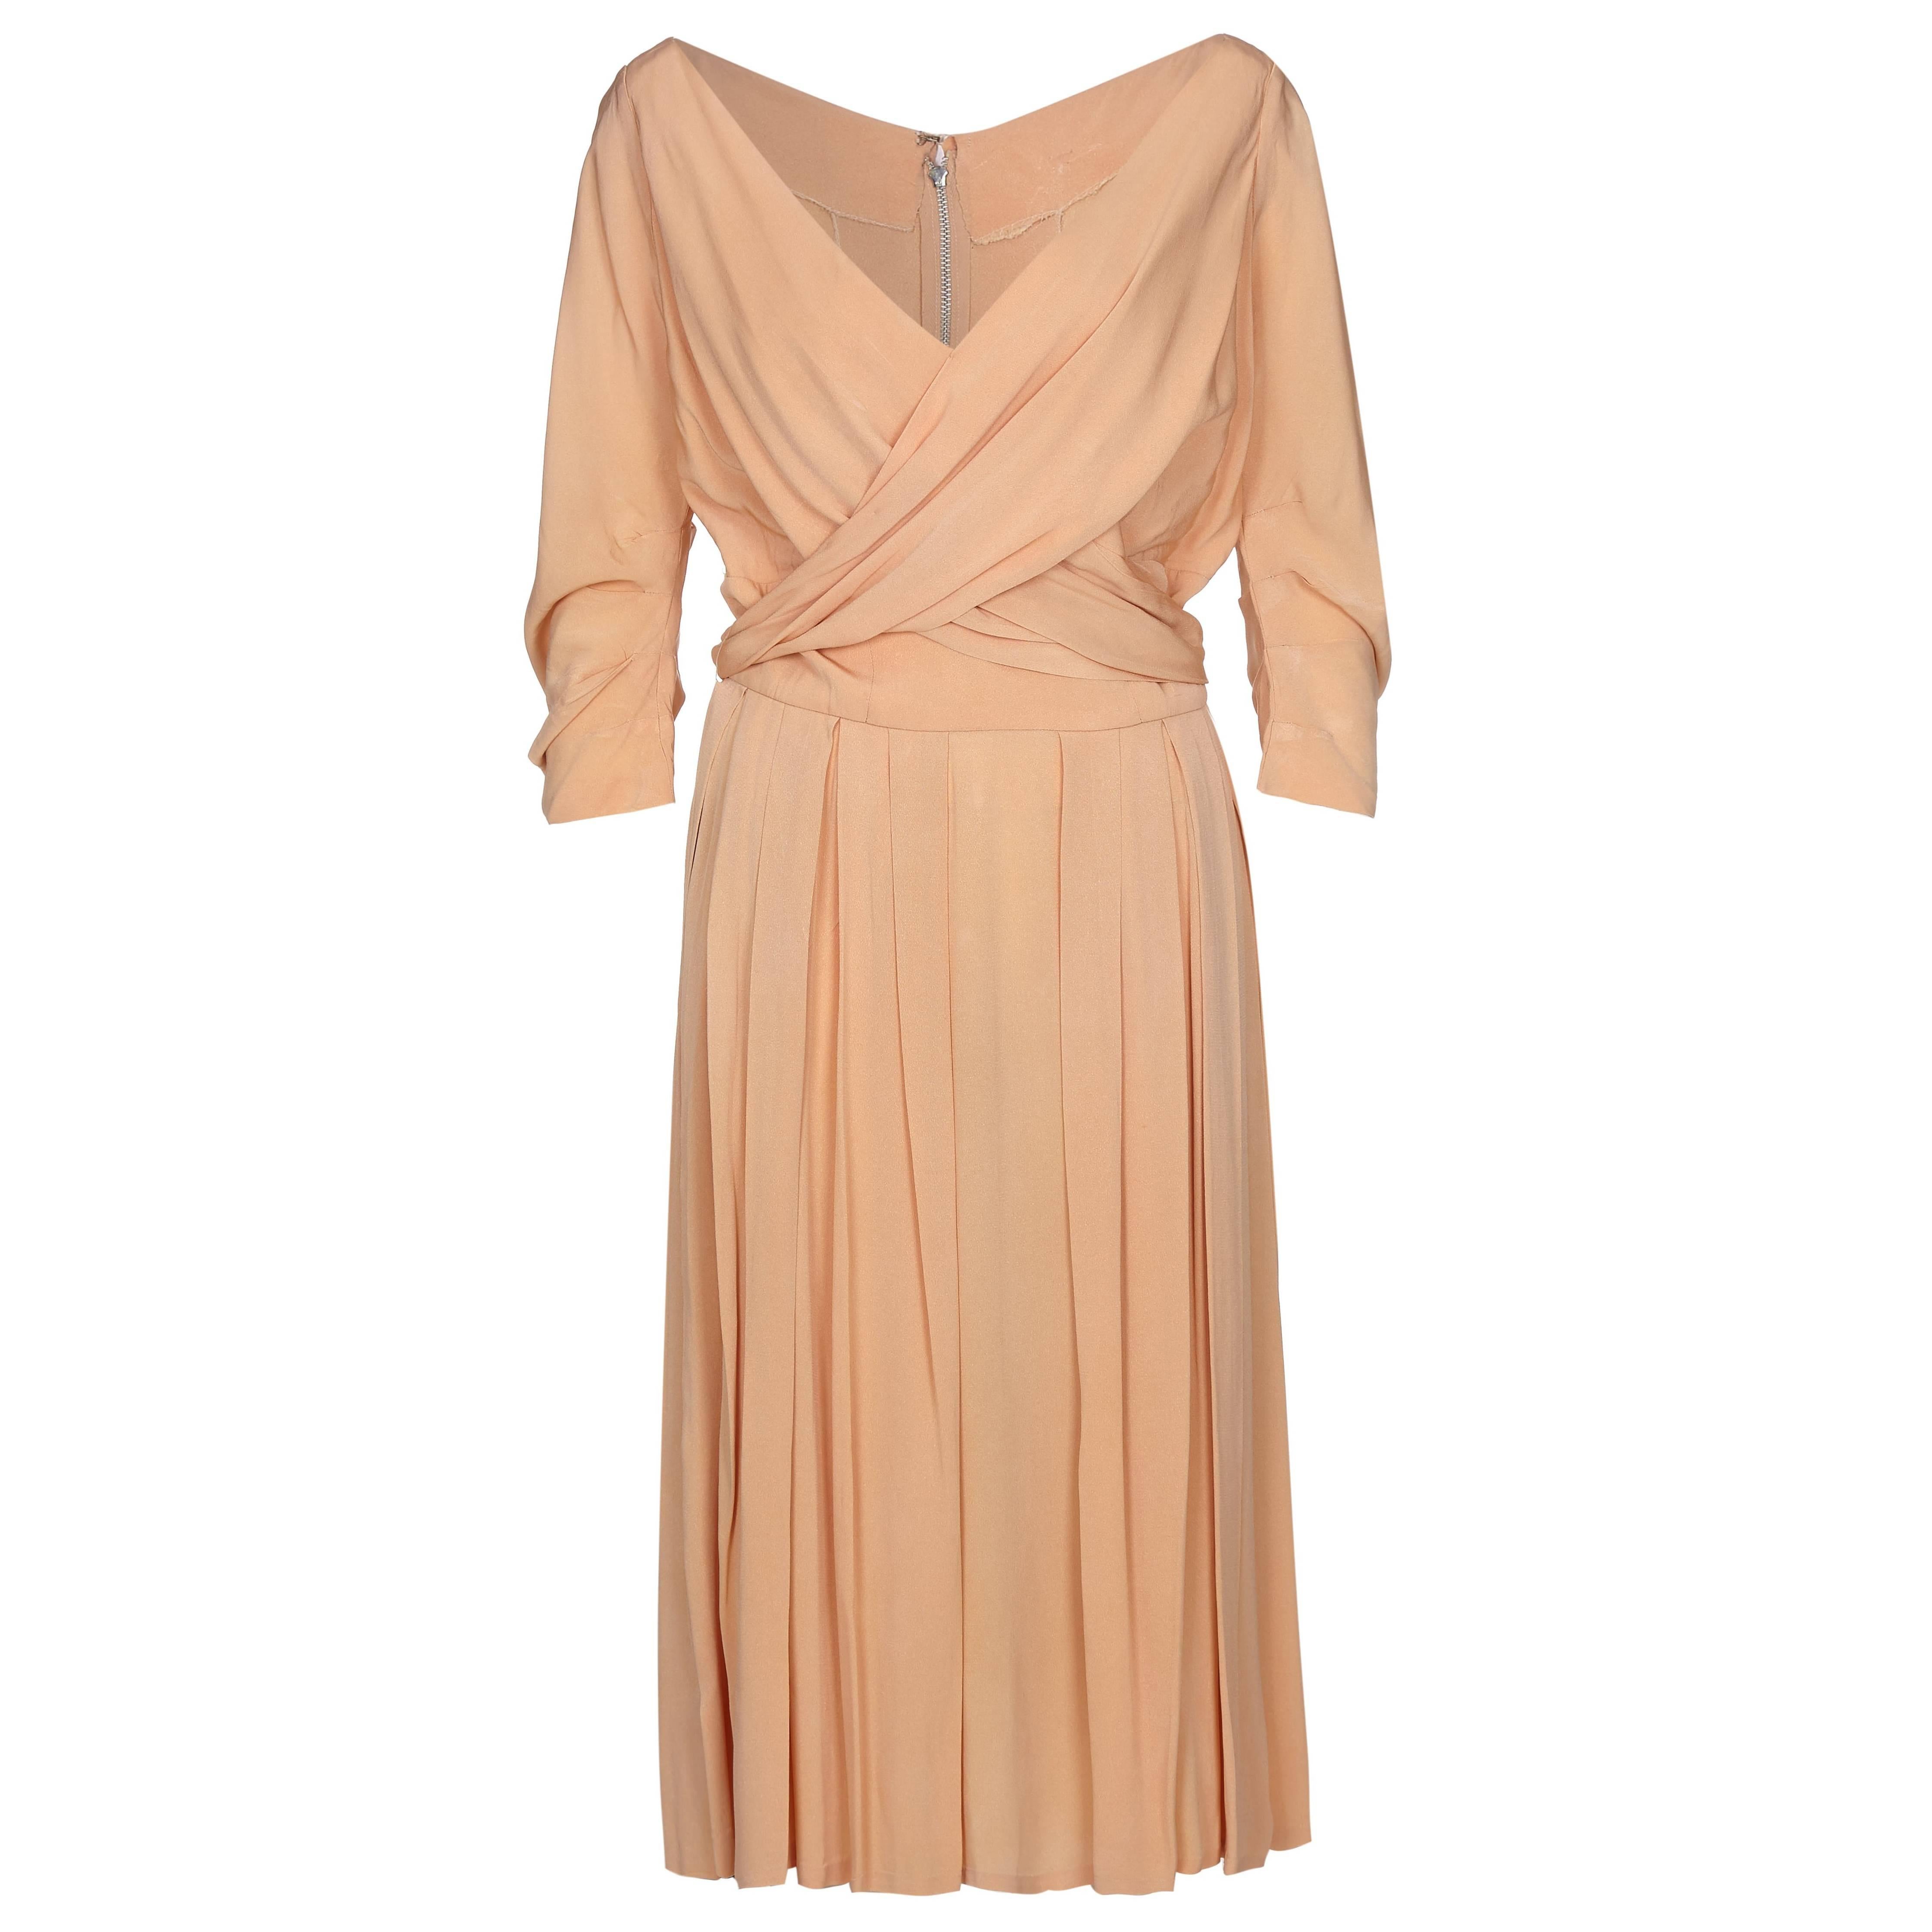 1950s Christian Dior New Look Peach Silk Dress With Cross Over Bodice